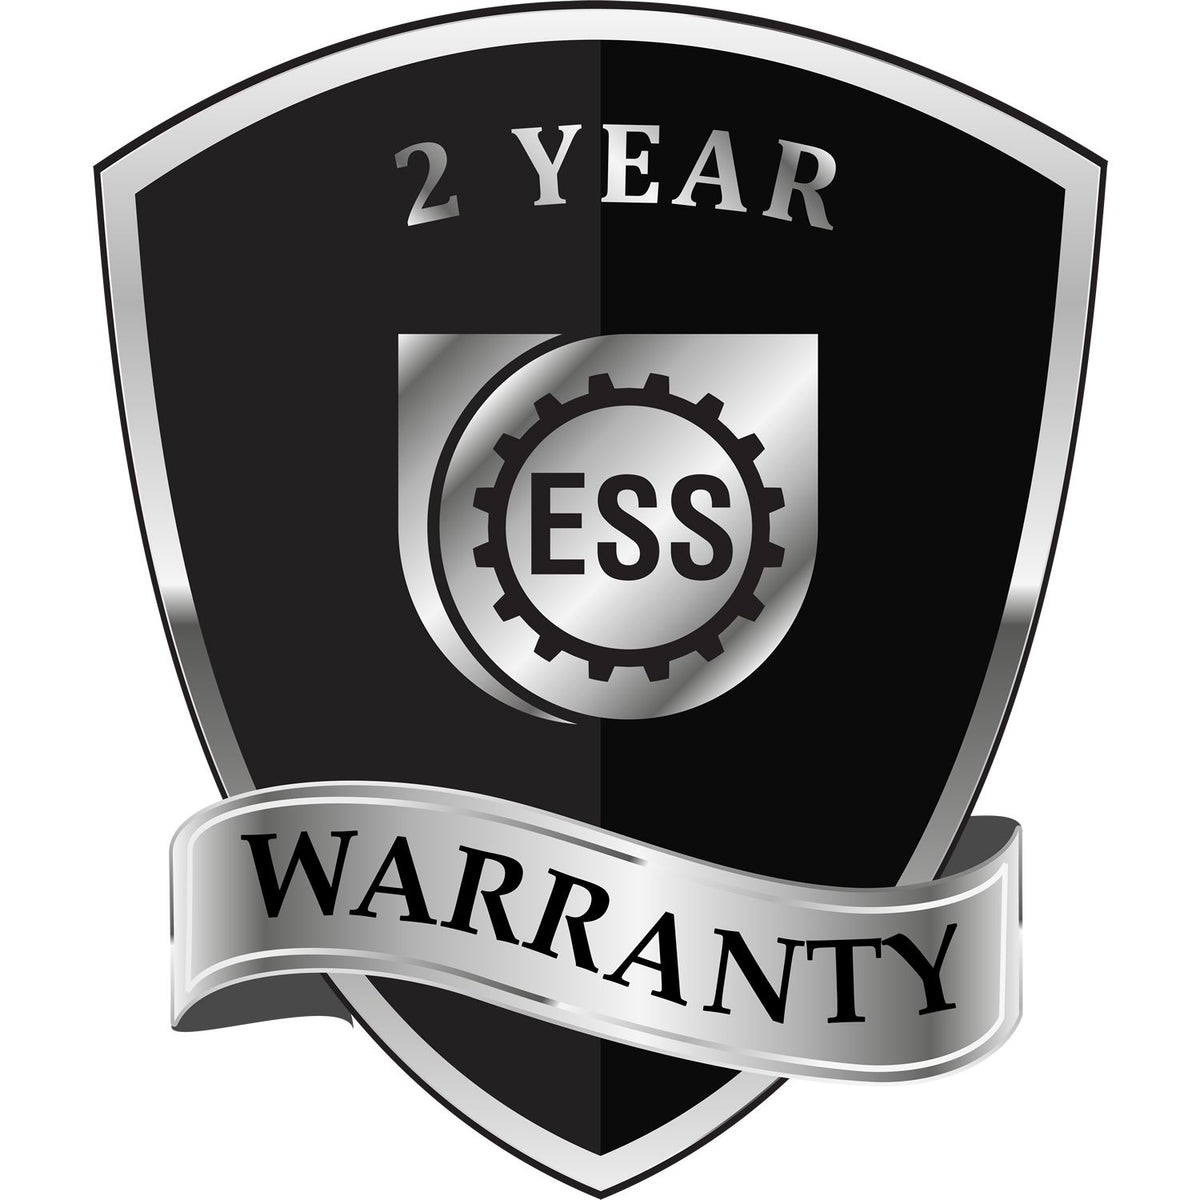 A black and silver badge or emblem showing warranty information for the Gift Mississippi Land Surveyor Seal